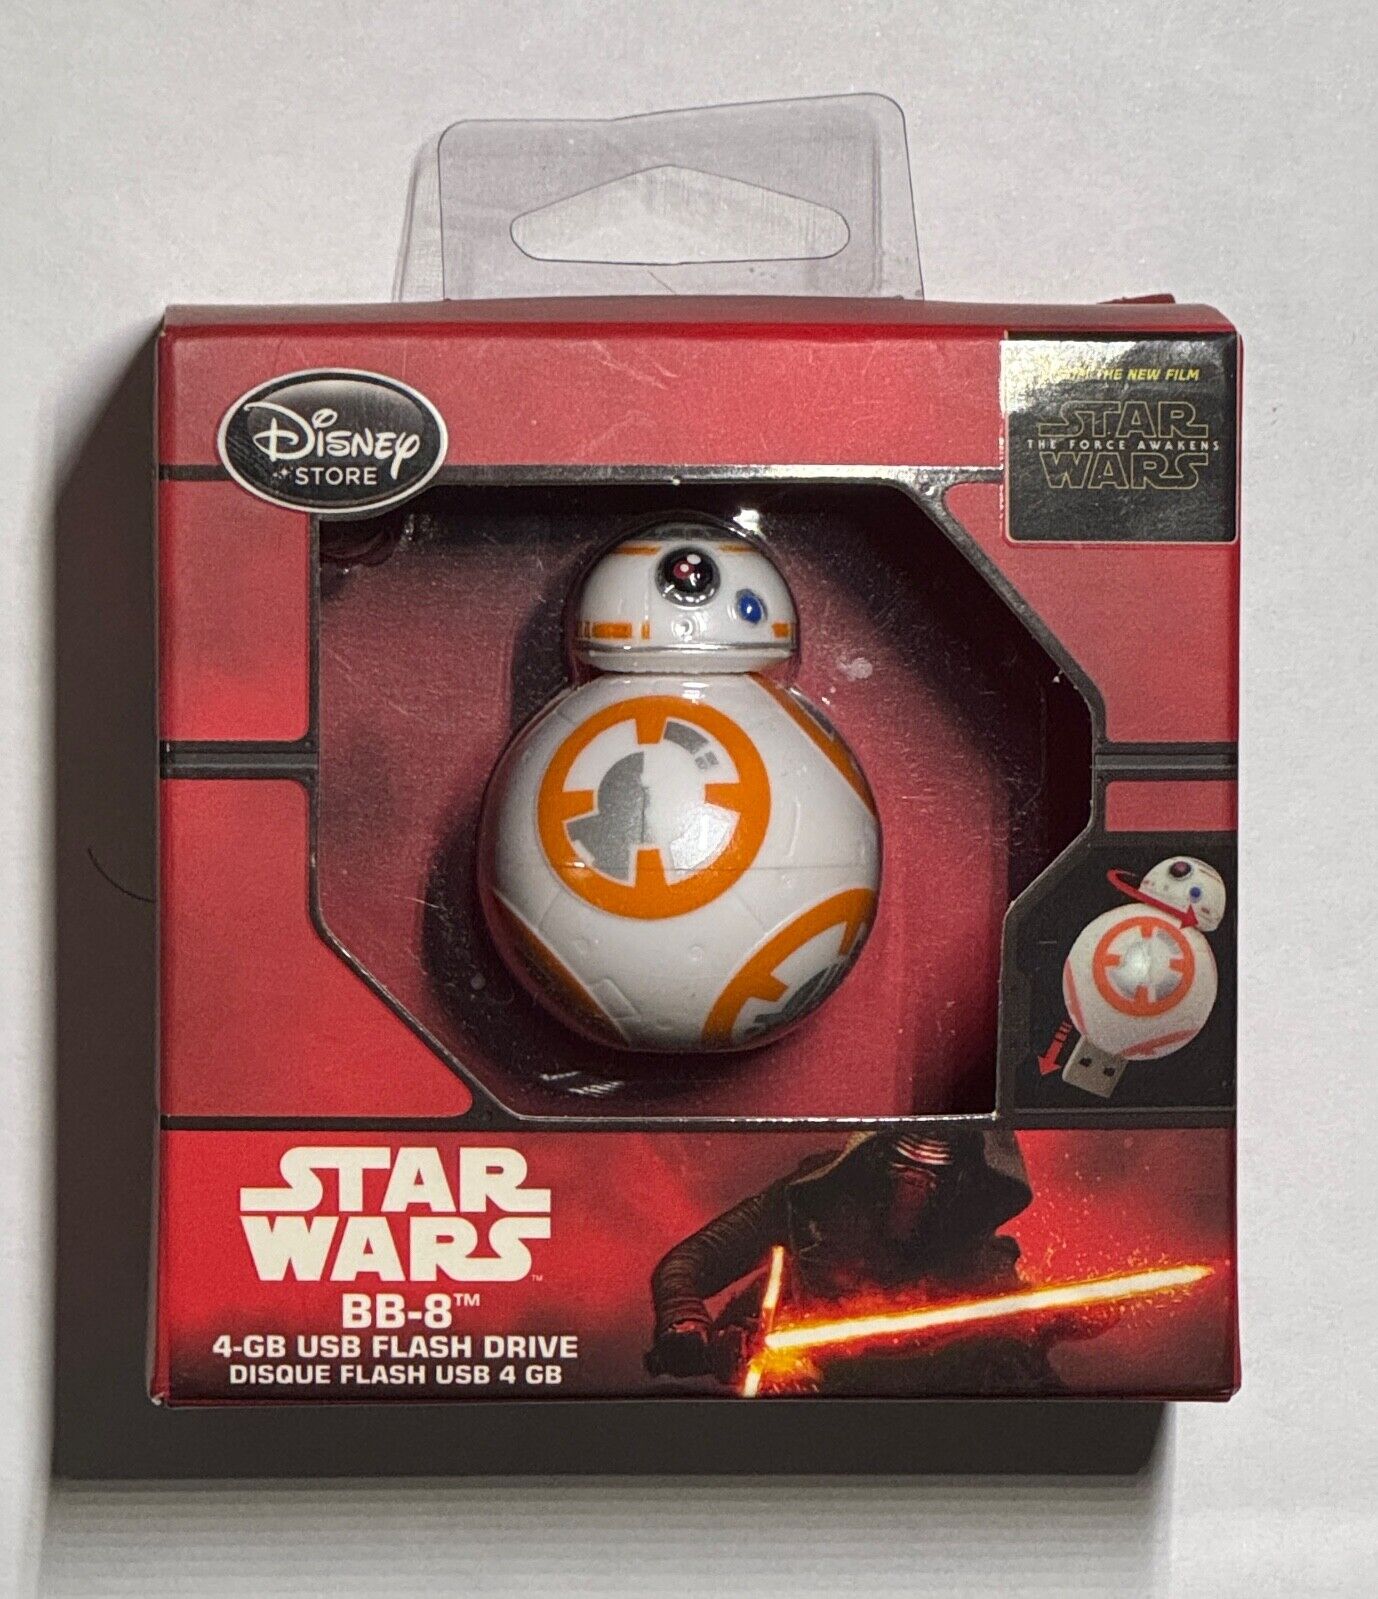 Disney Store Star Wars BB-8 USB 2.0 Flash Drive 4GB NEW IN PACKAGE RARE